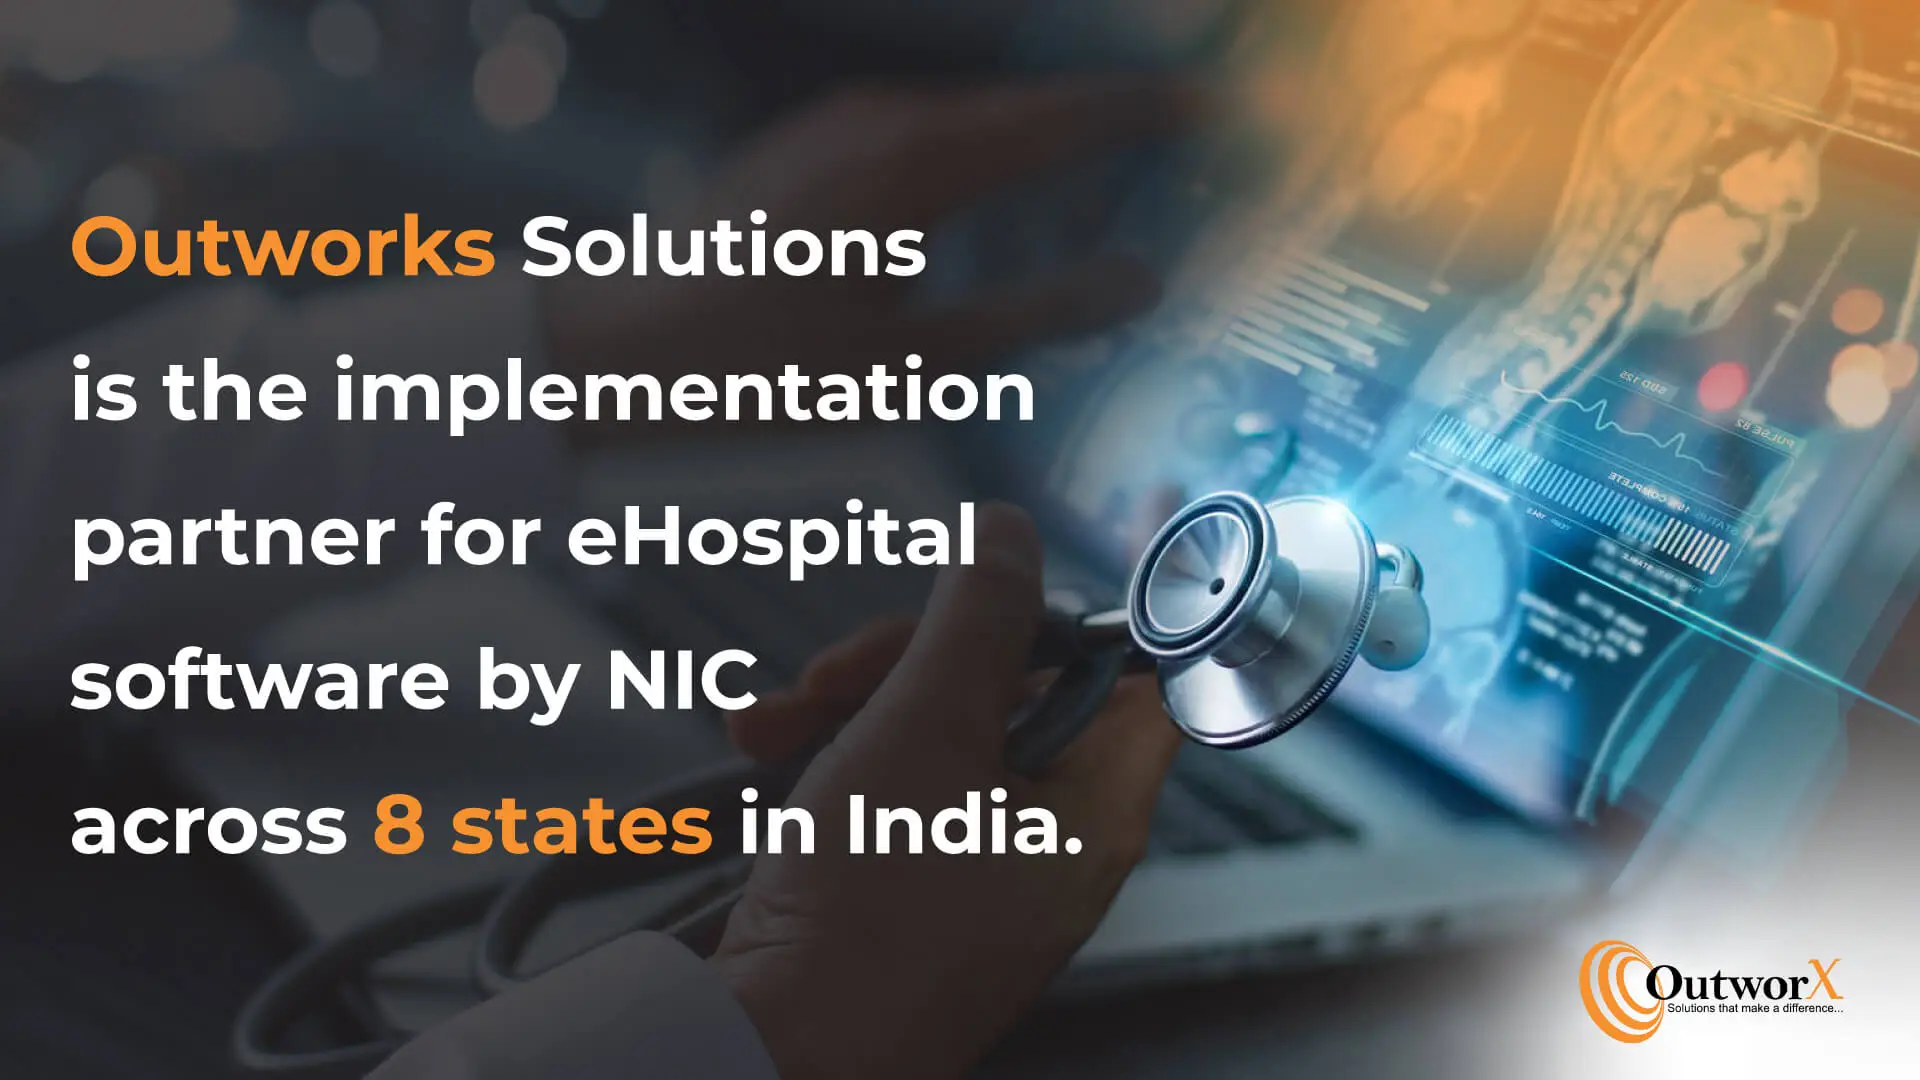 implementation partner for nic, ehospital software nic, implementation partner, outworks solutions, outworx corporation